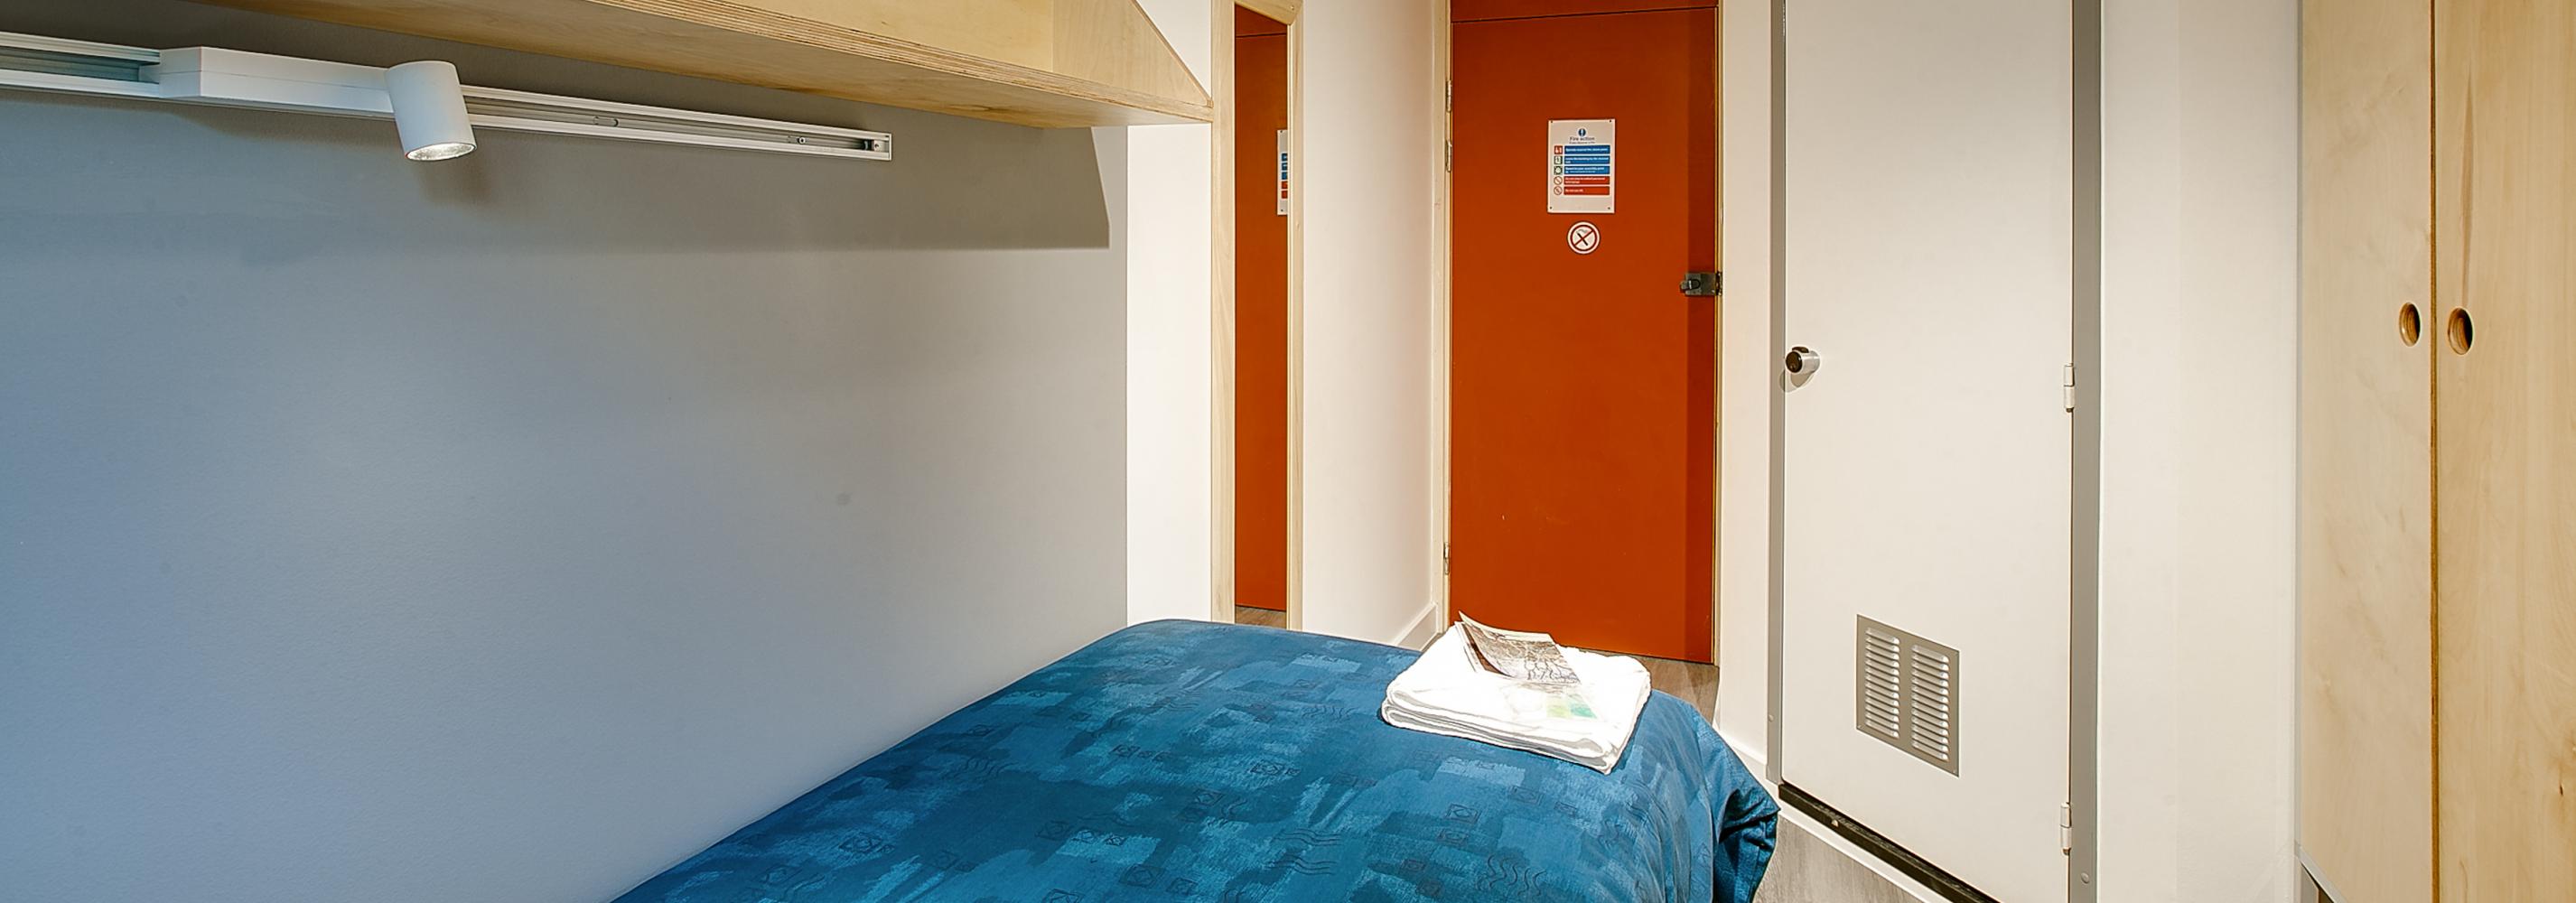 Standard Single bedroom with en-suite bathroom 